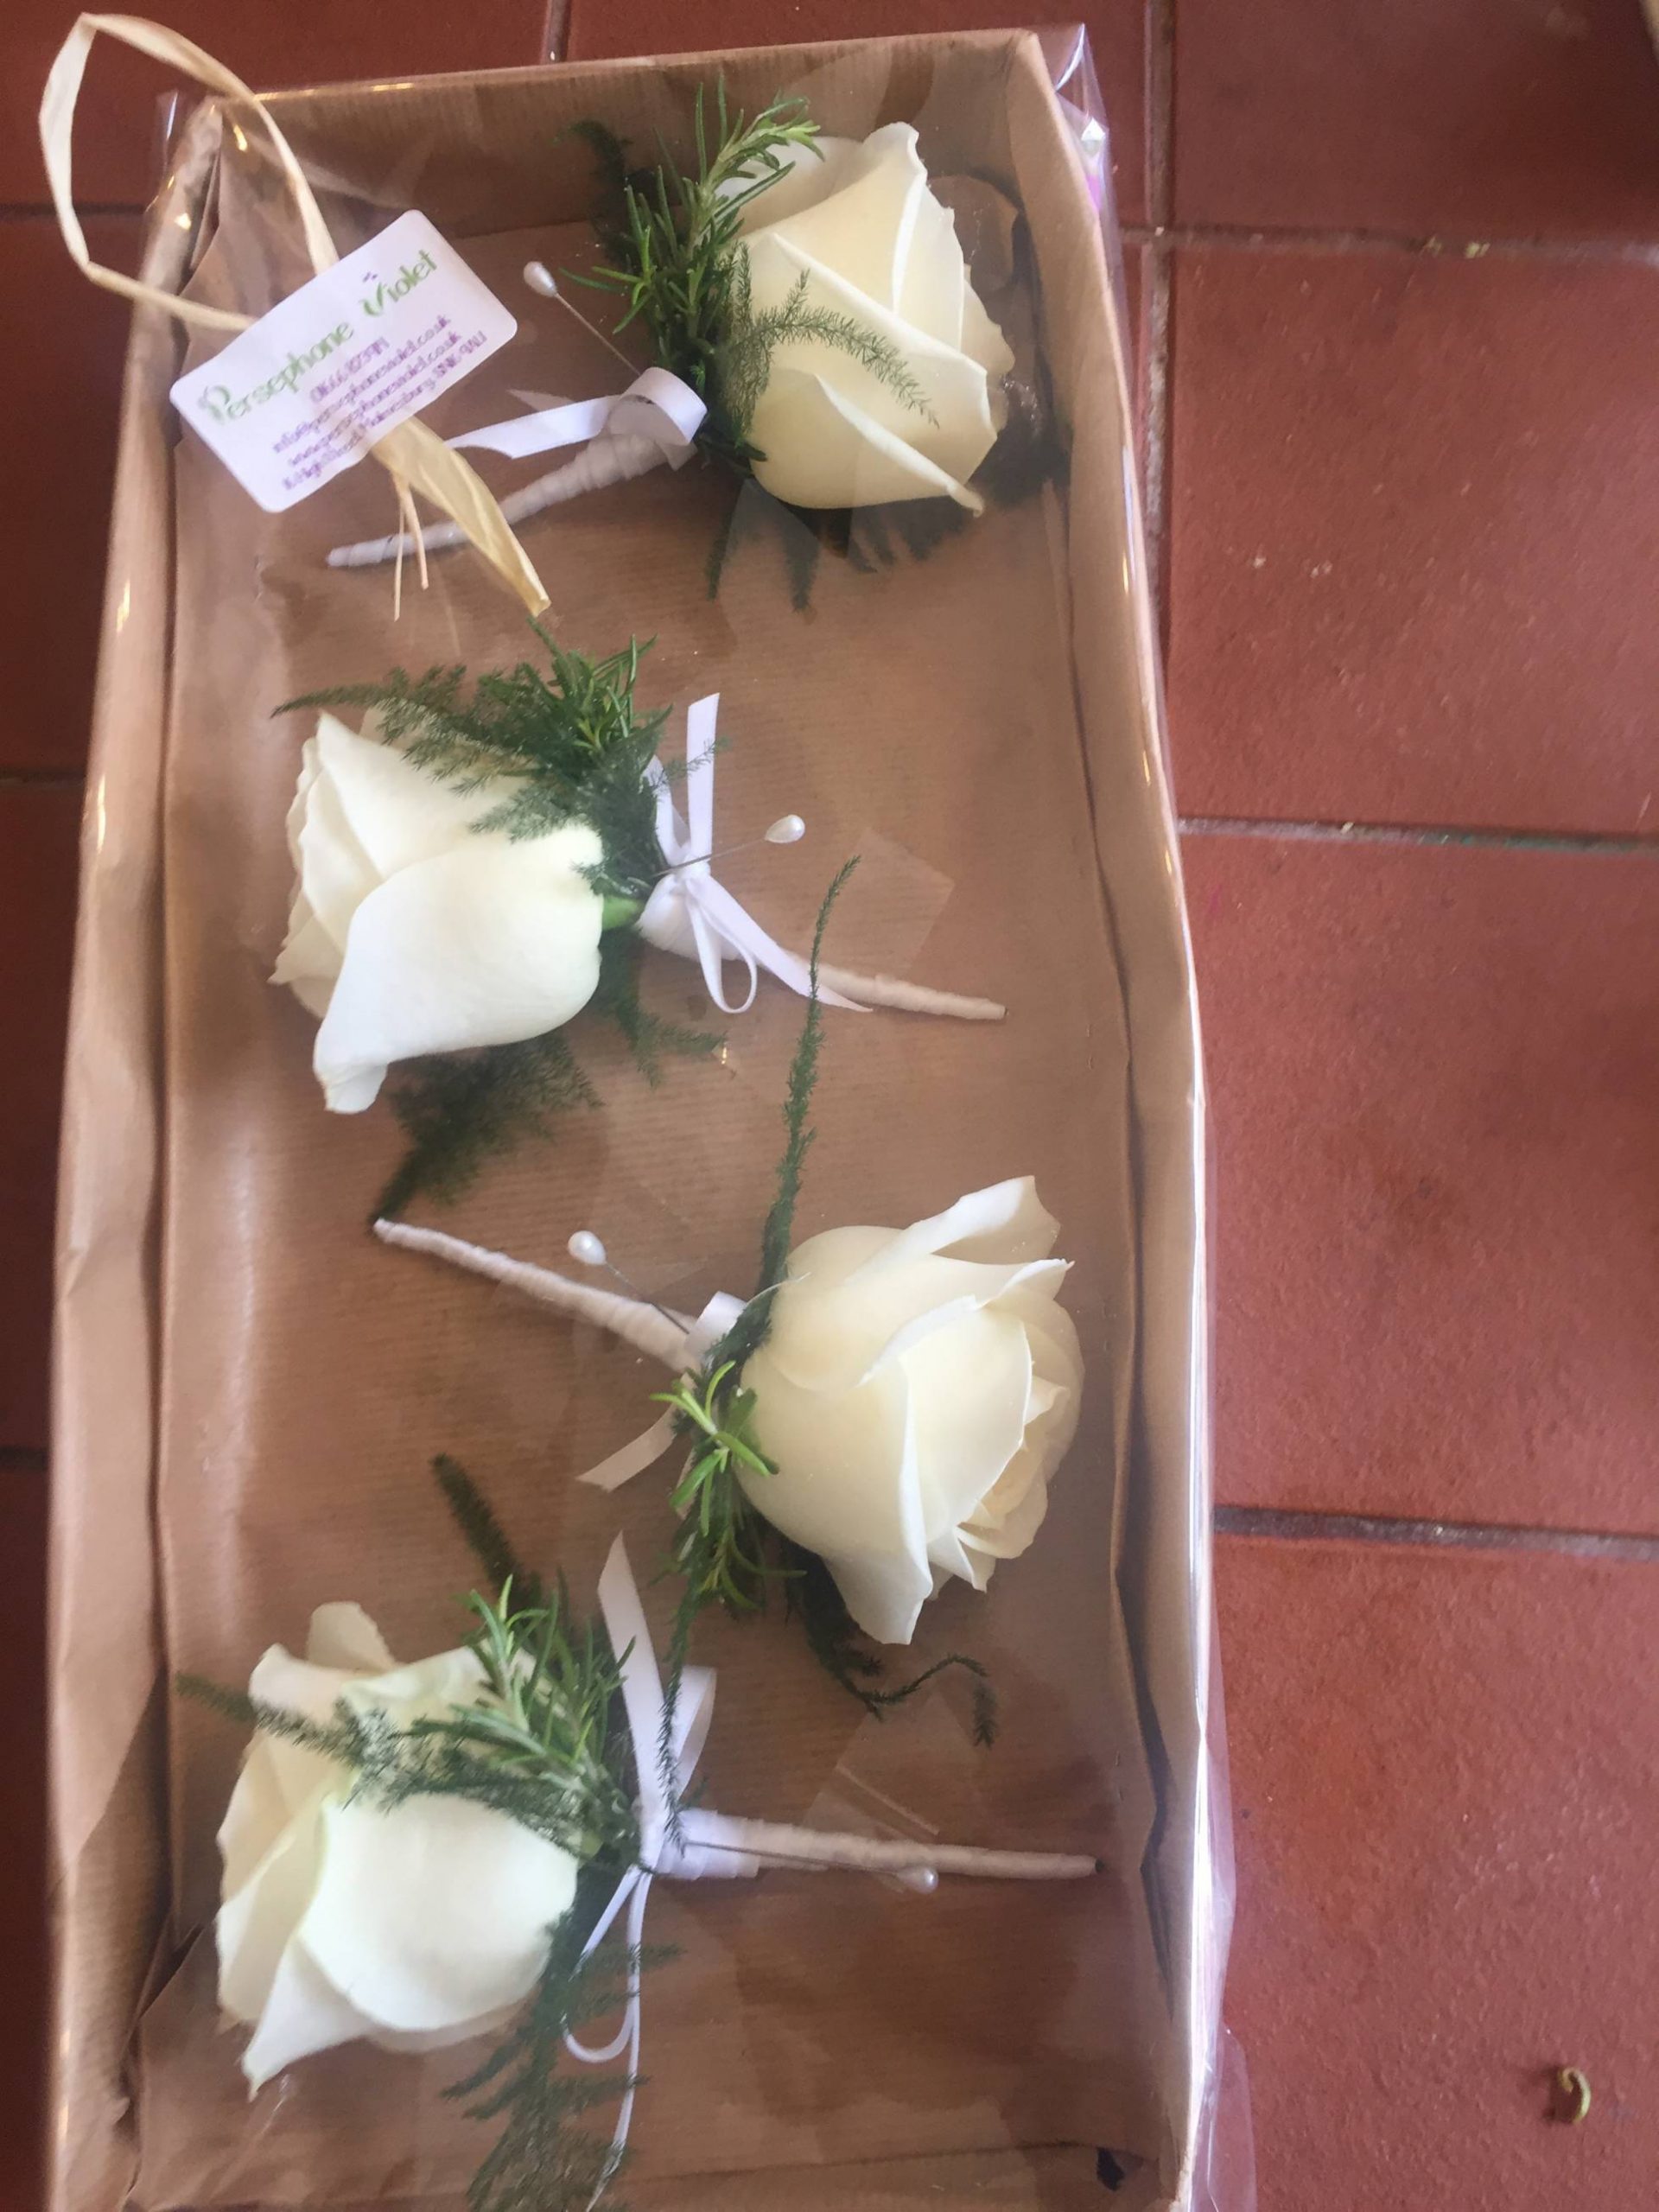 Persephone Violet Bespoke Wedding Flowers  